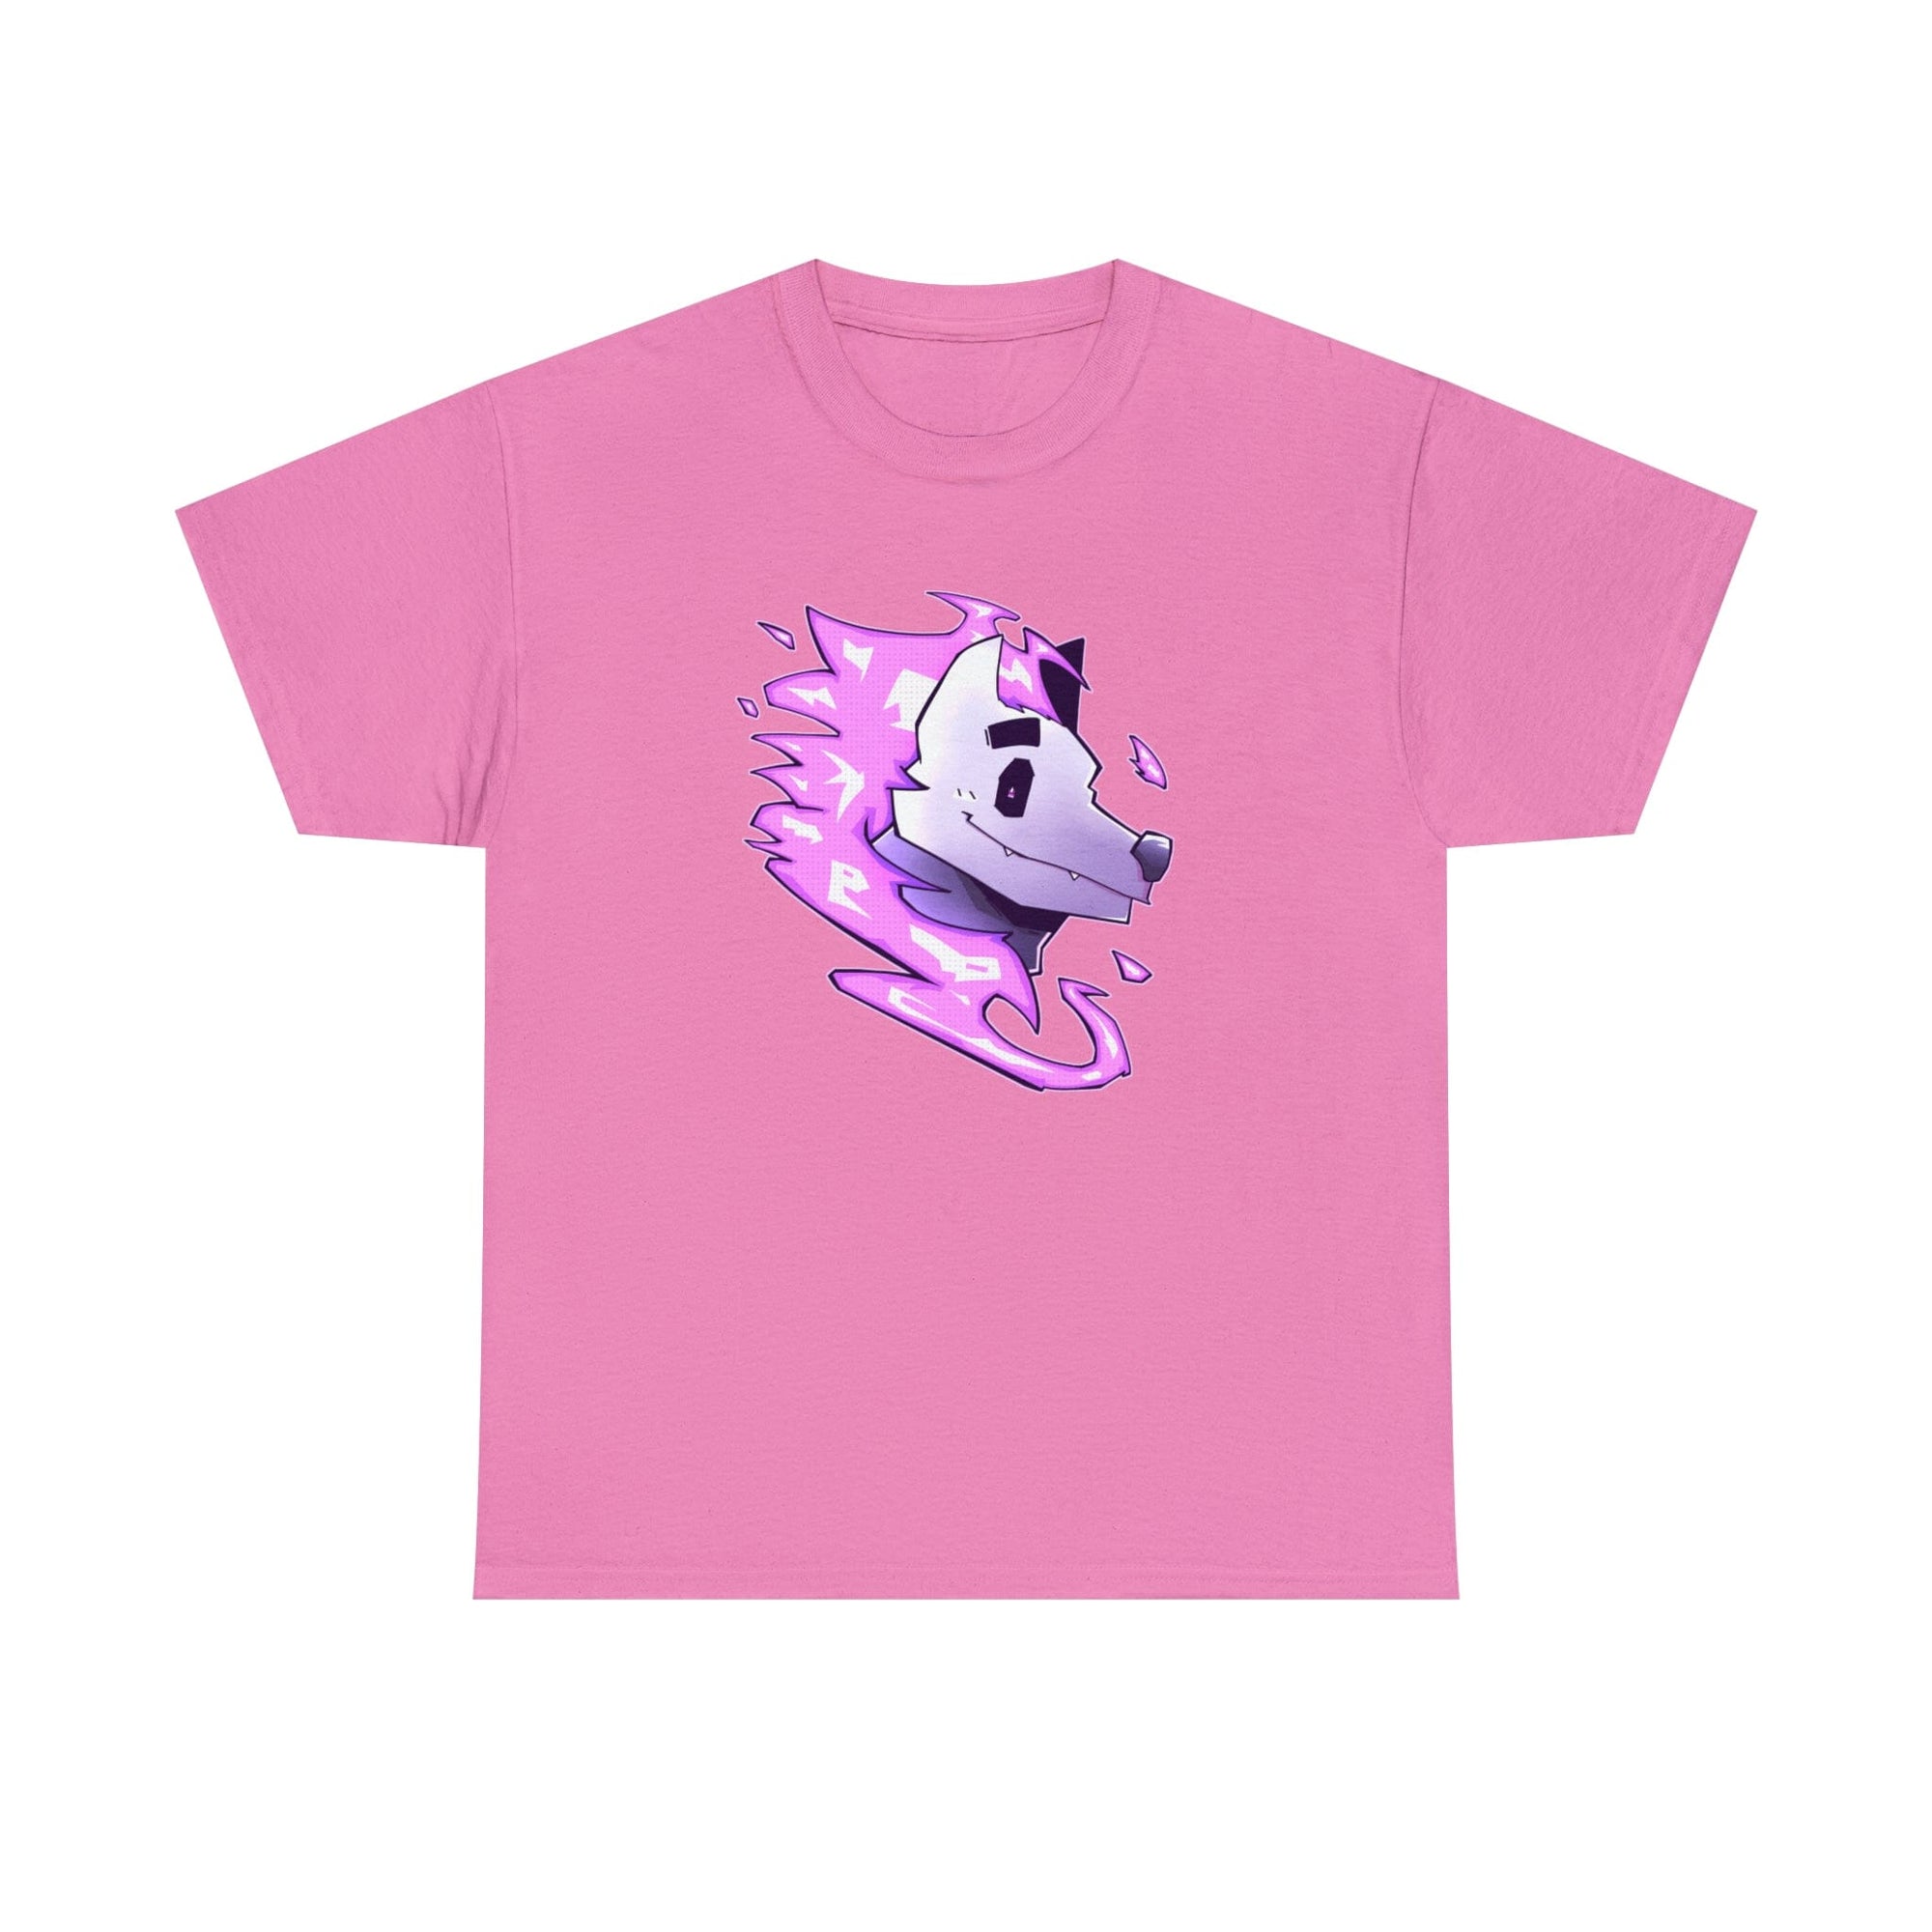 Ruarrc vibes - T-Shirt T-Shirt AFLT-DaveyDboi Pink S 